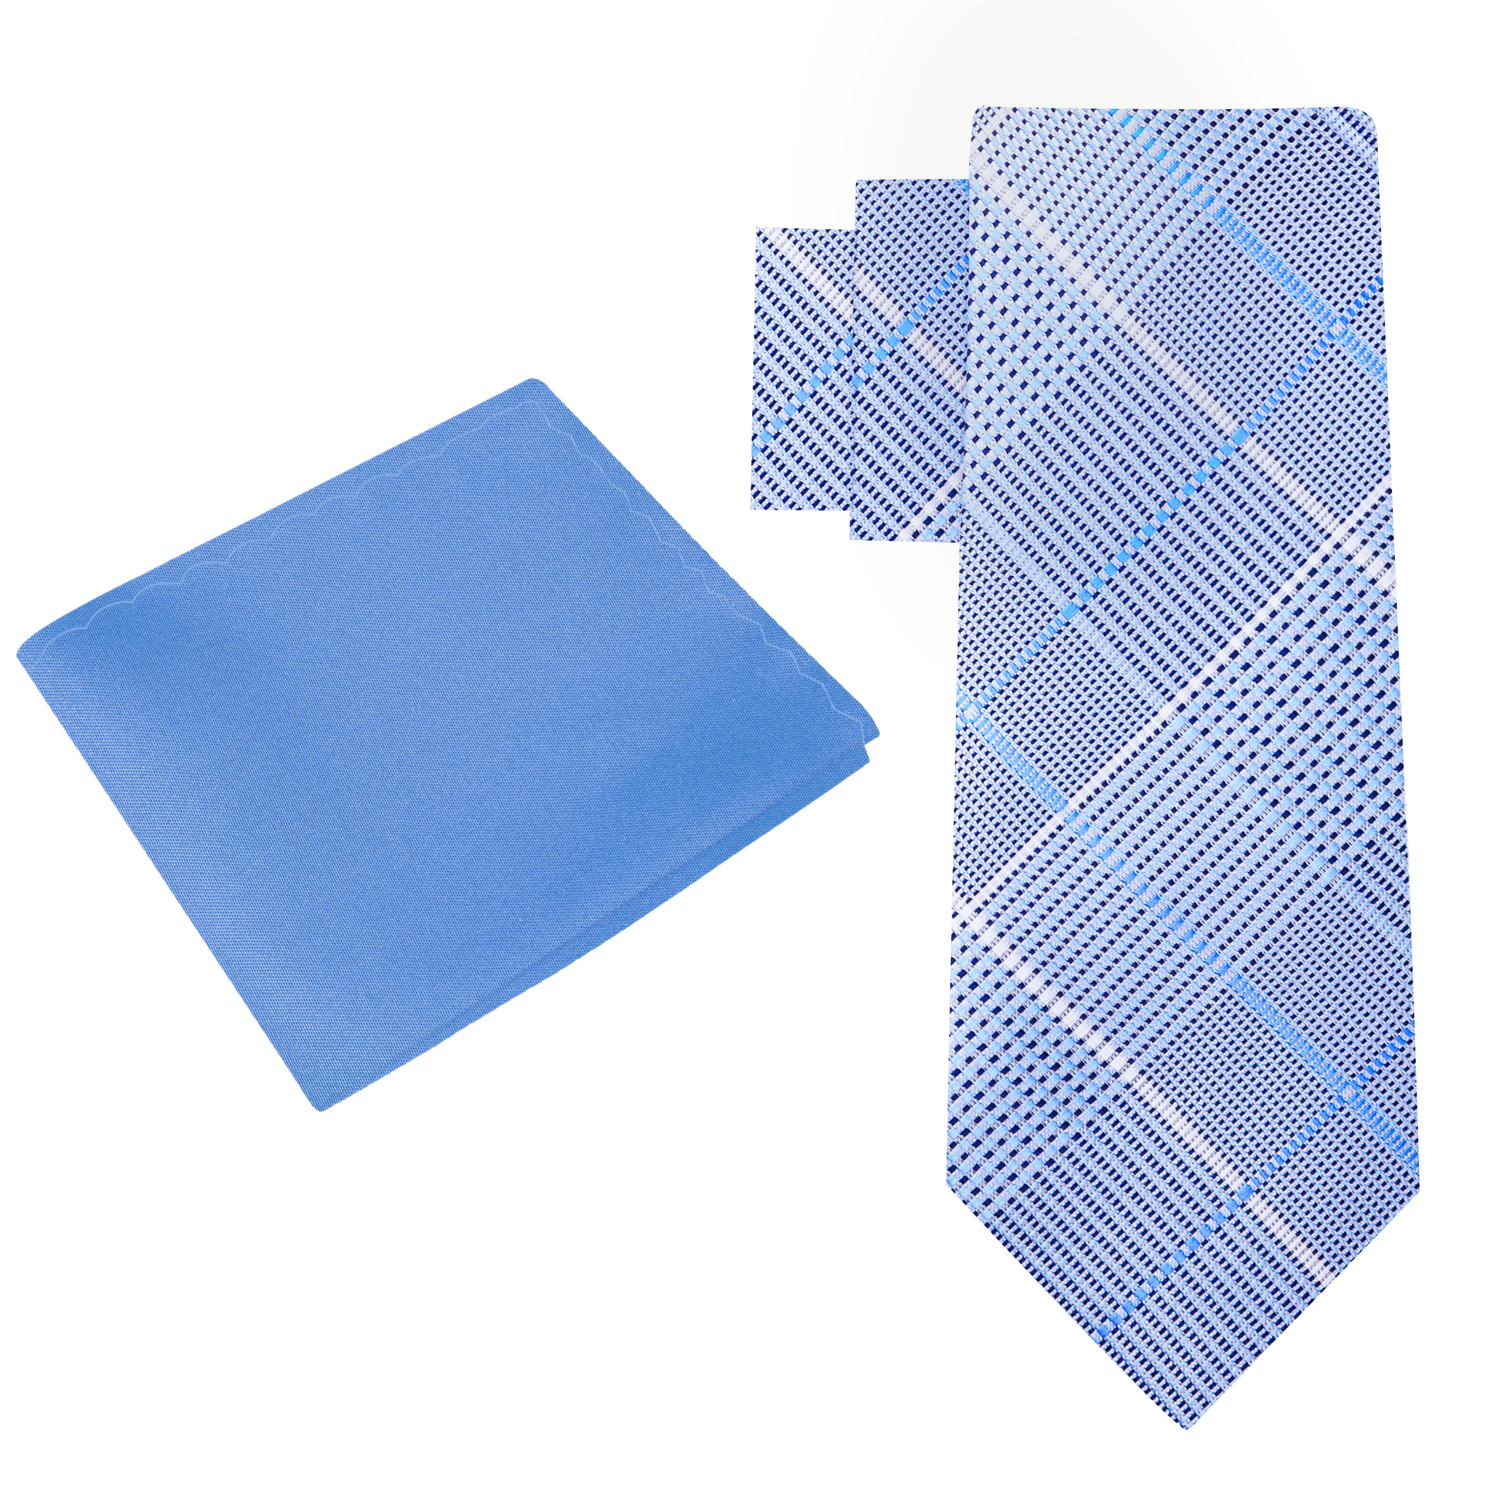 View 2: Light Blue, White Plaid Tie and Light Blue Square